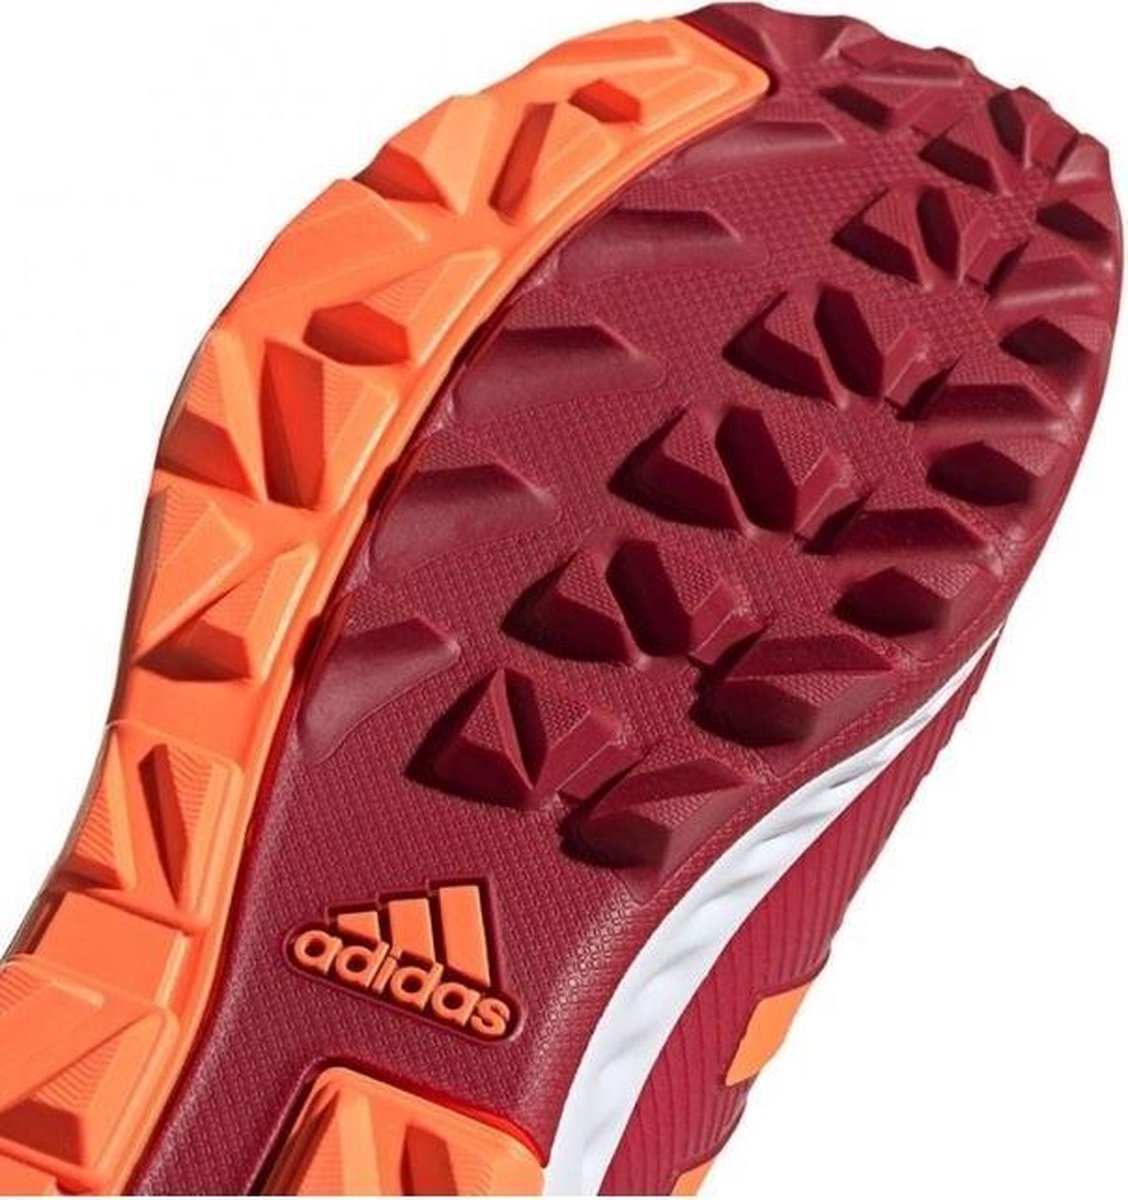 Adidas adiPower Hockeyschoenen - Outdoor schoenen  - rood donker - 45 1/3 Sportschoenen fw8xykb6